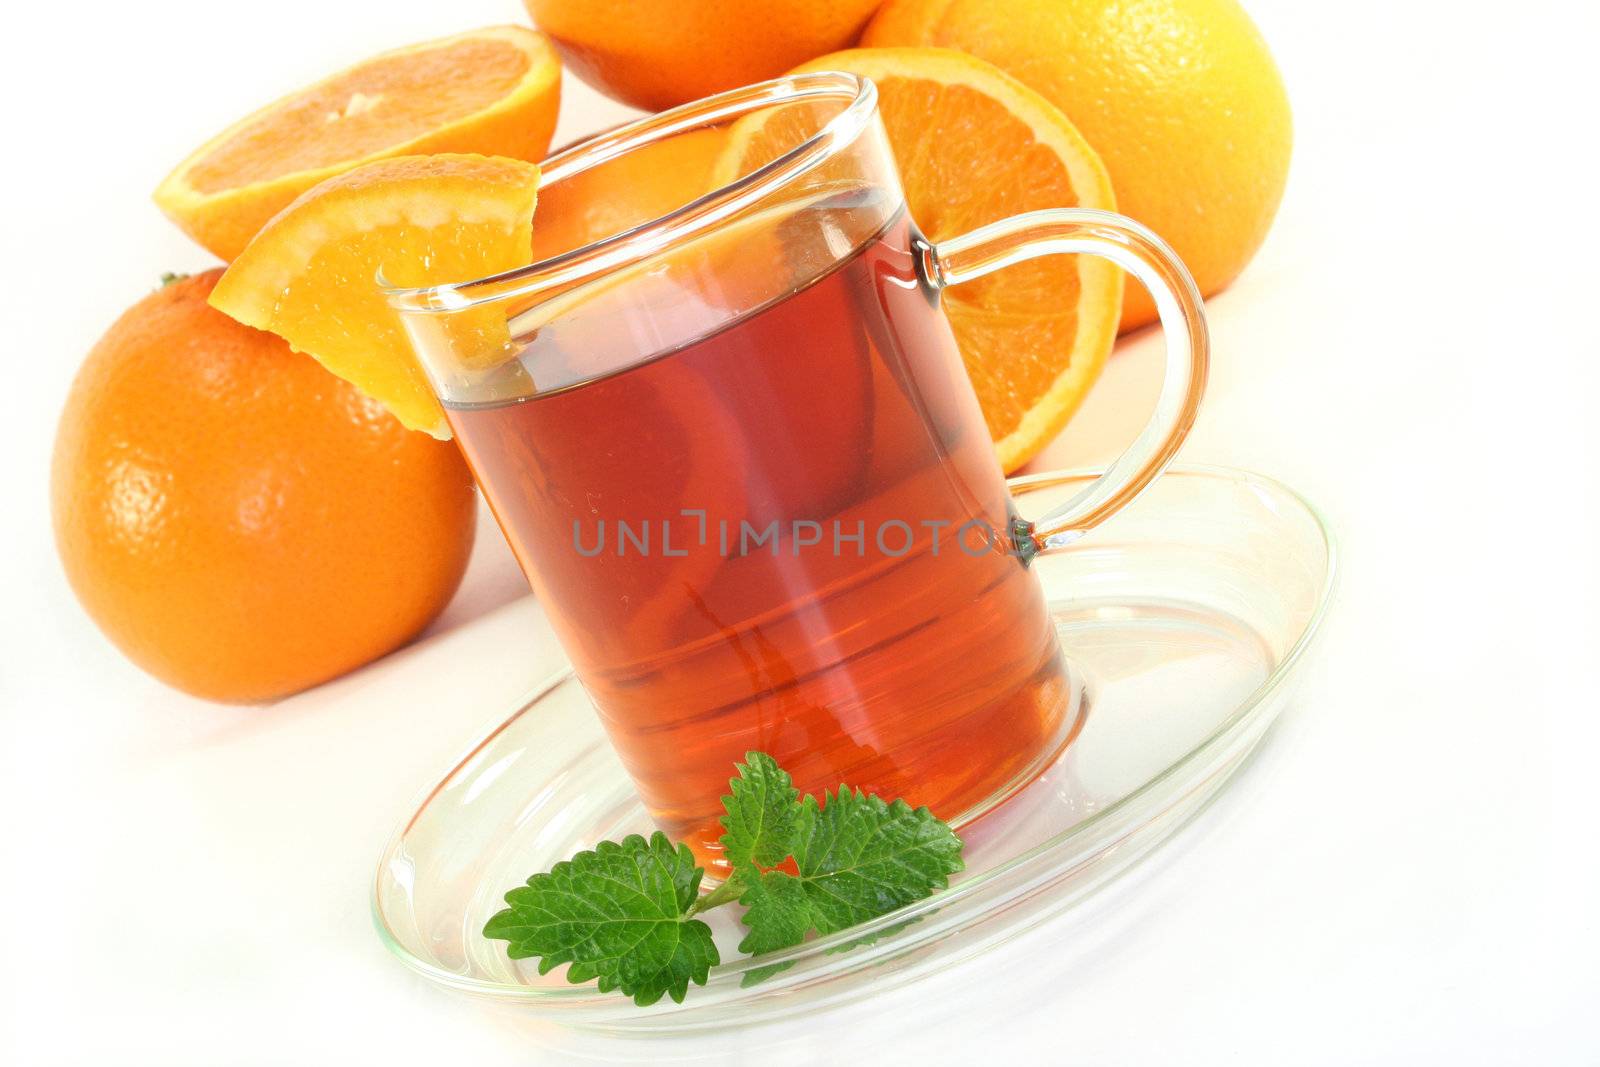 a cup of orange tea with fresh oranges and lemon balm